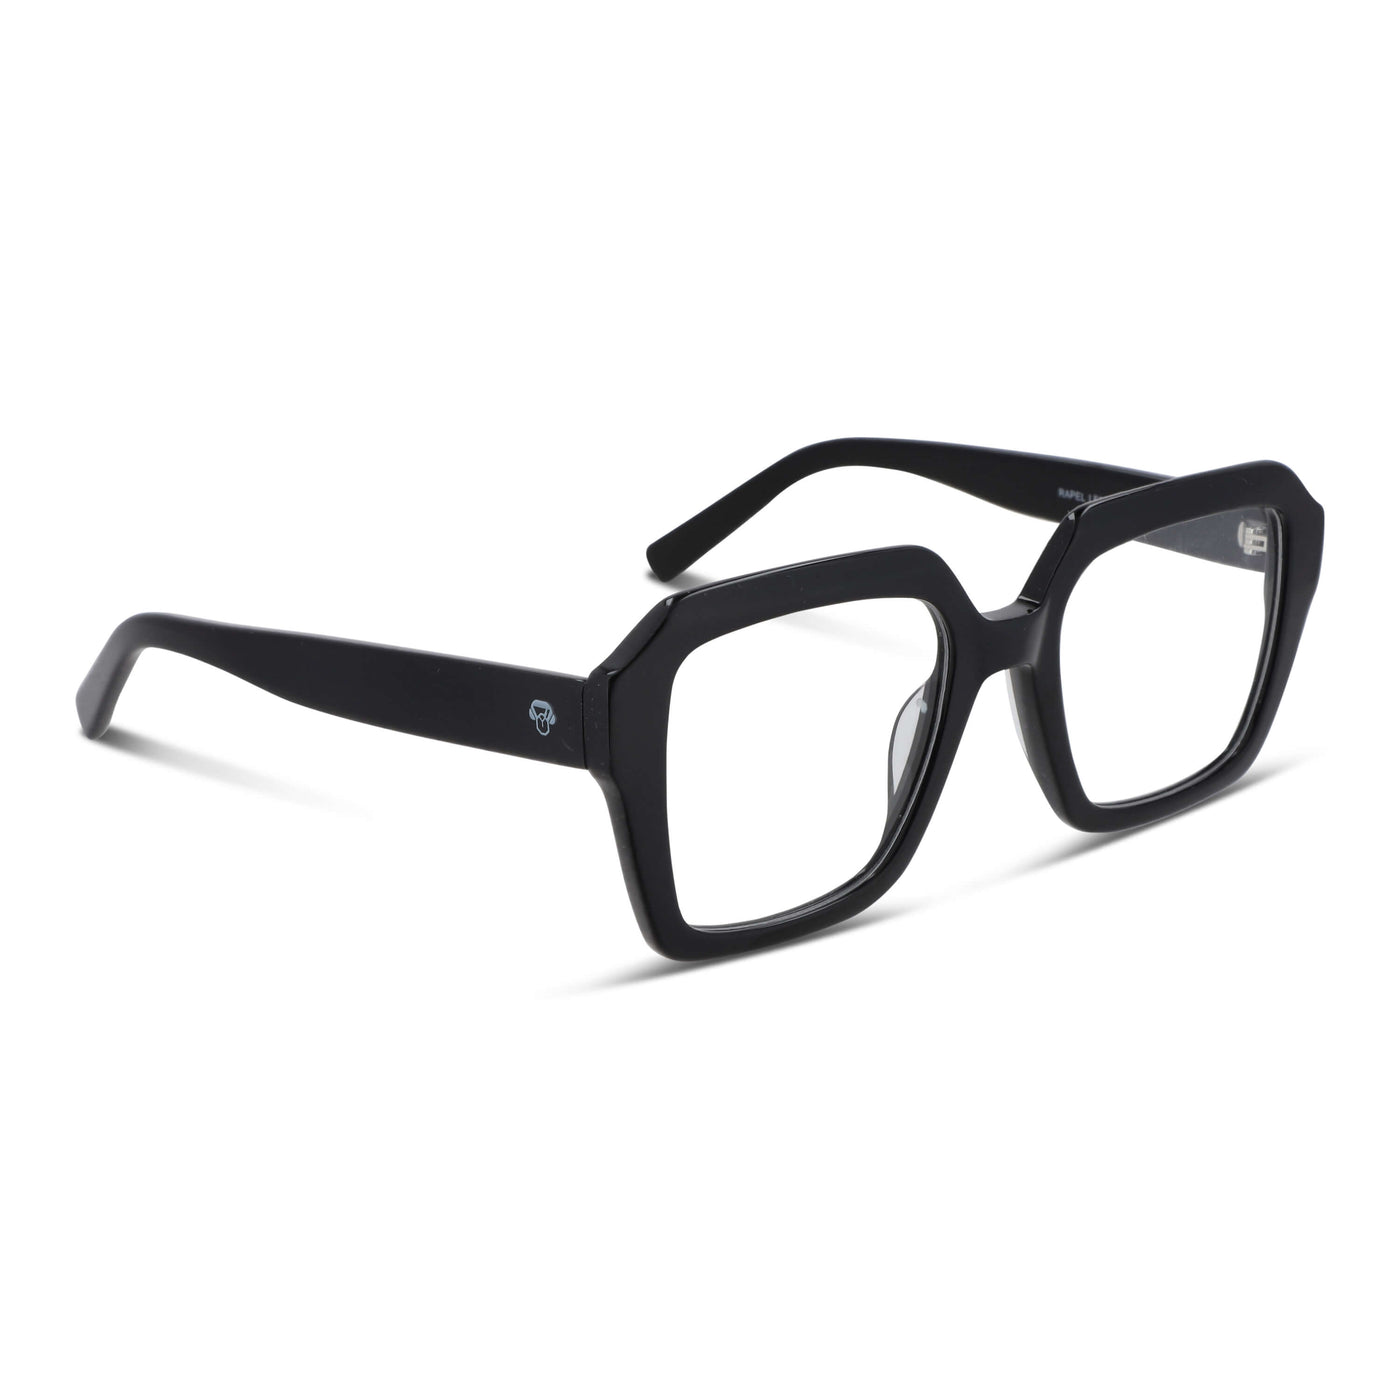  lentes opticos cuadrados negro mujer cara redonda grande receta multifocal bifocal adelgazado filtro azul.jpg